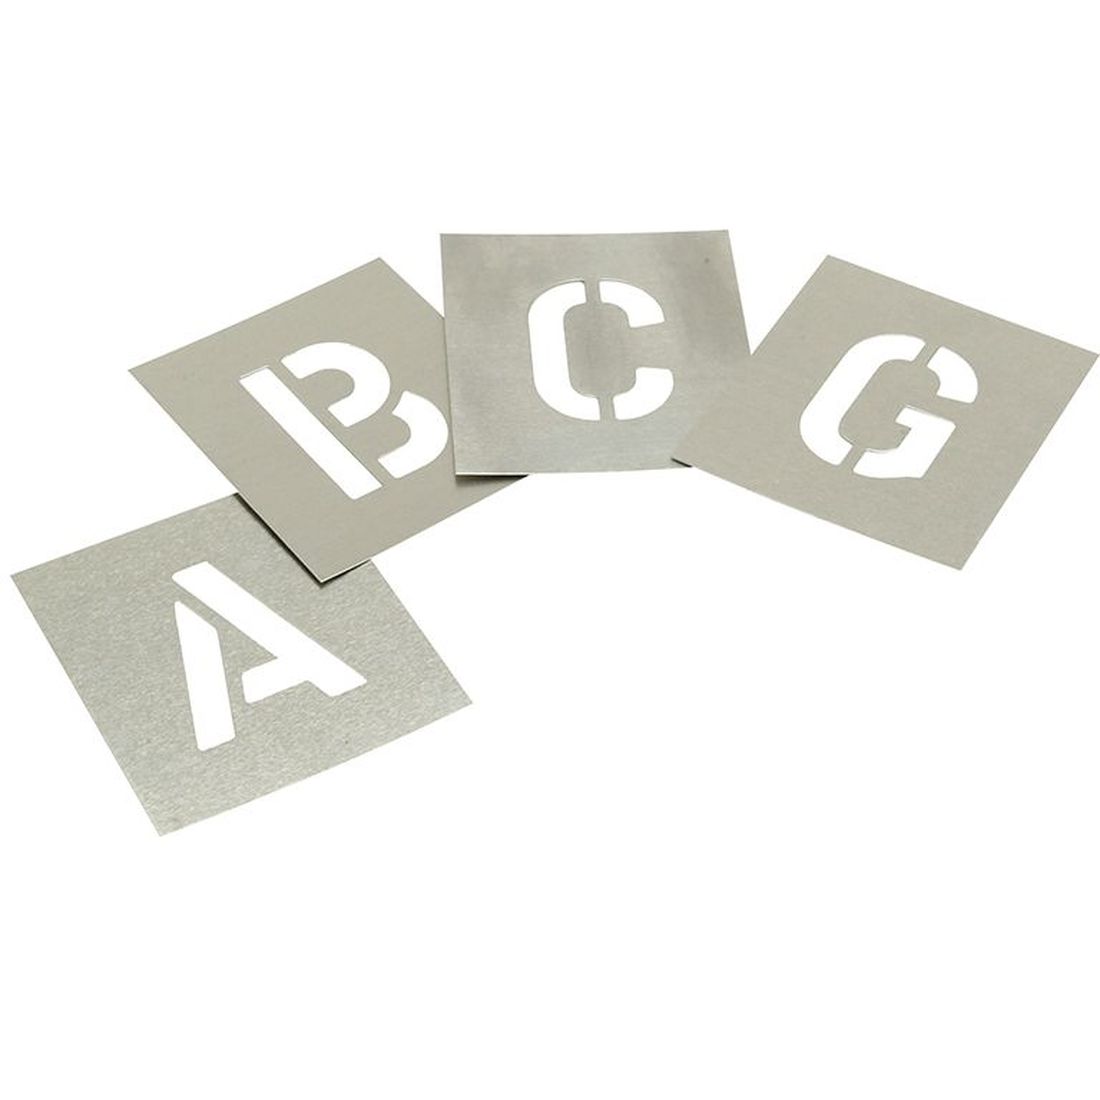 Stencils Set of Zinc Stencils - Letters 6in